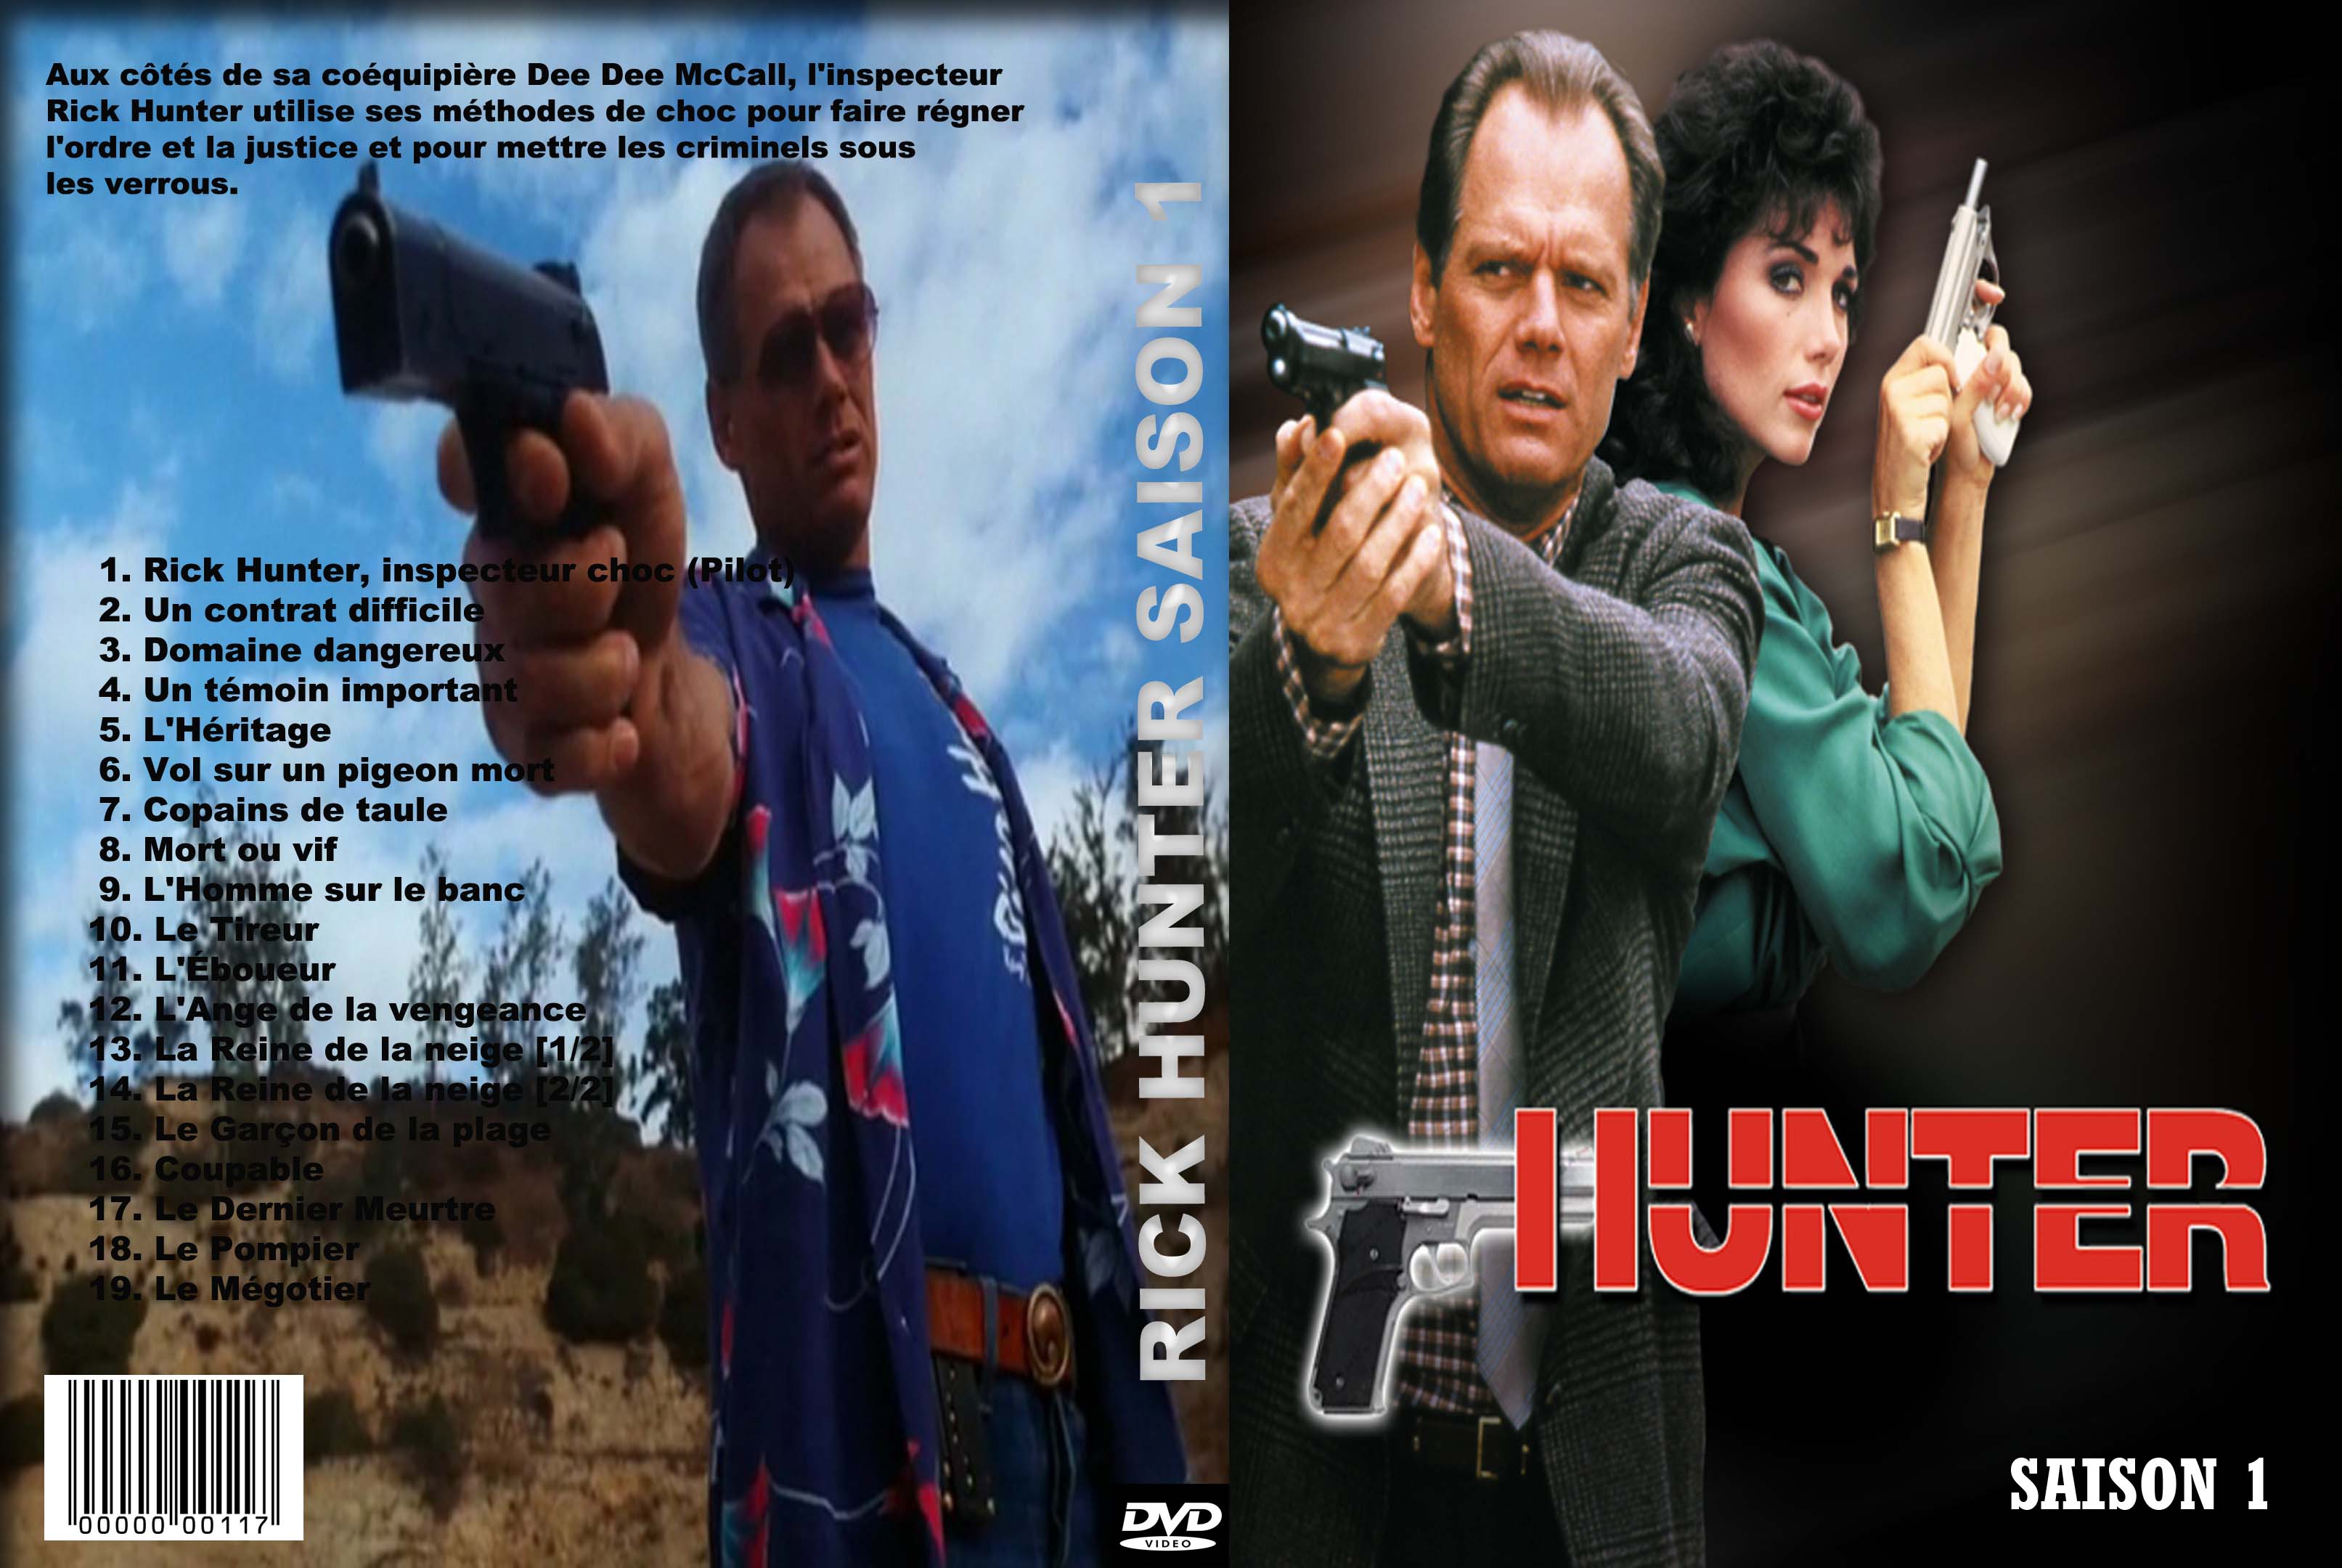 Jaquette DVD Rick Hunter Saison 1 custom